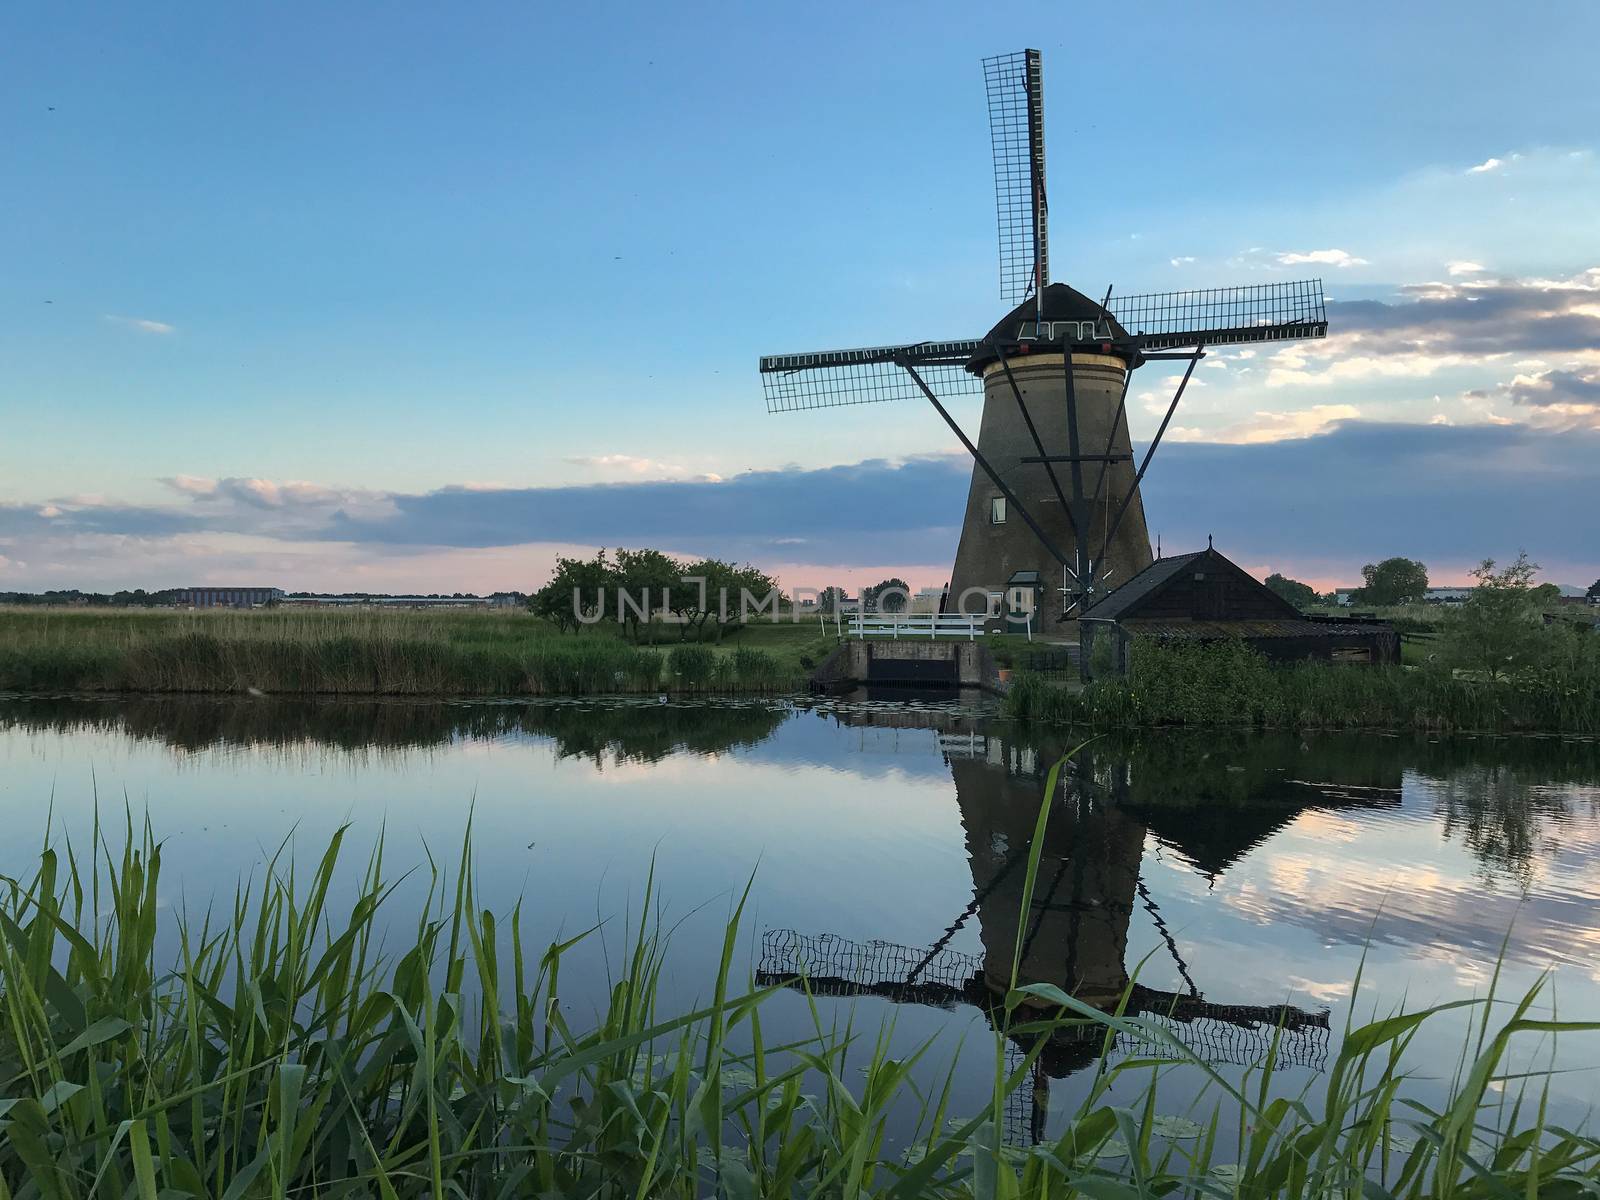 The Kinderdijk windmills by Kartouchken